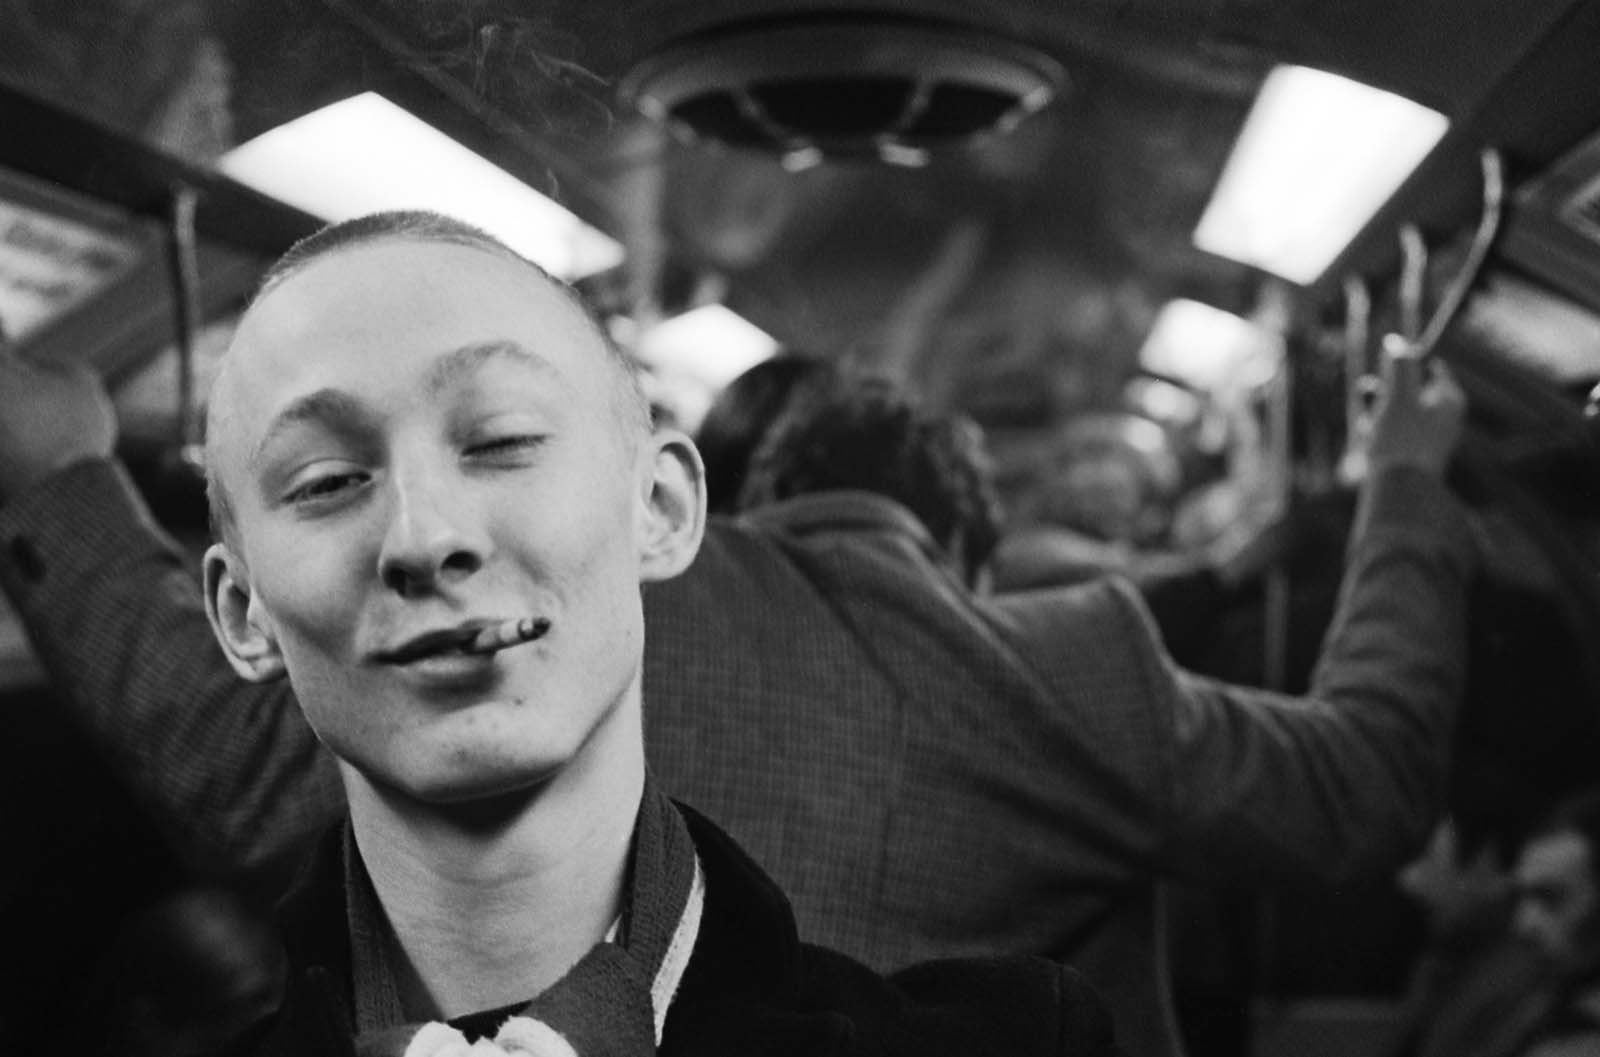 british skinhead subculture photographs